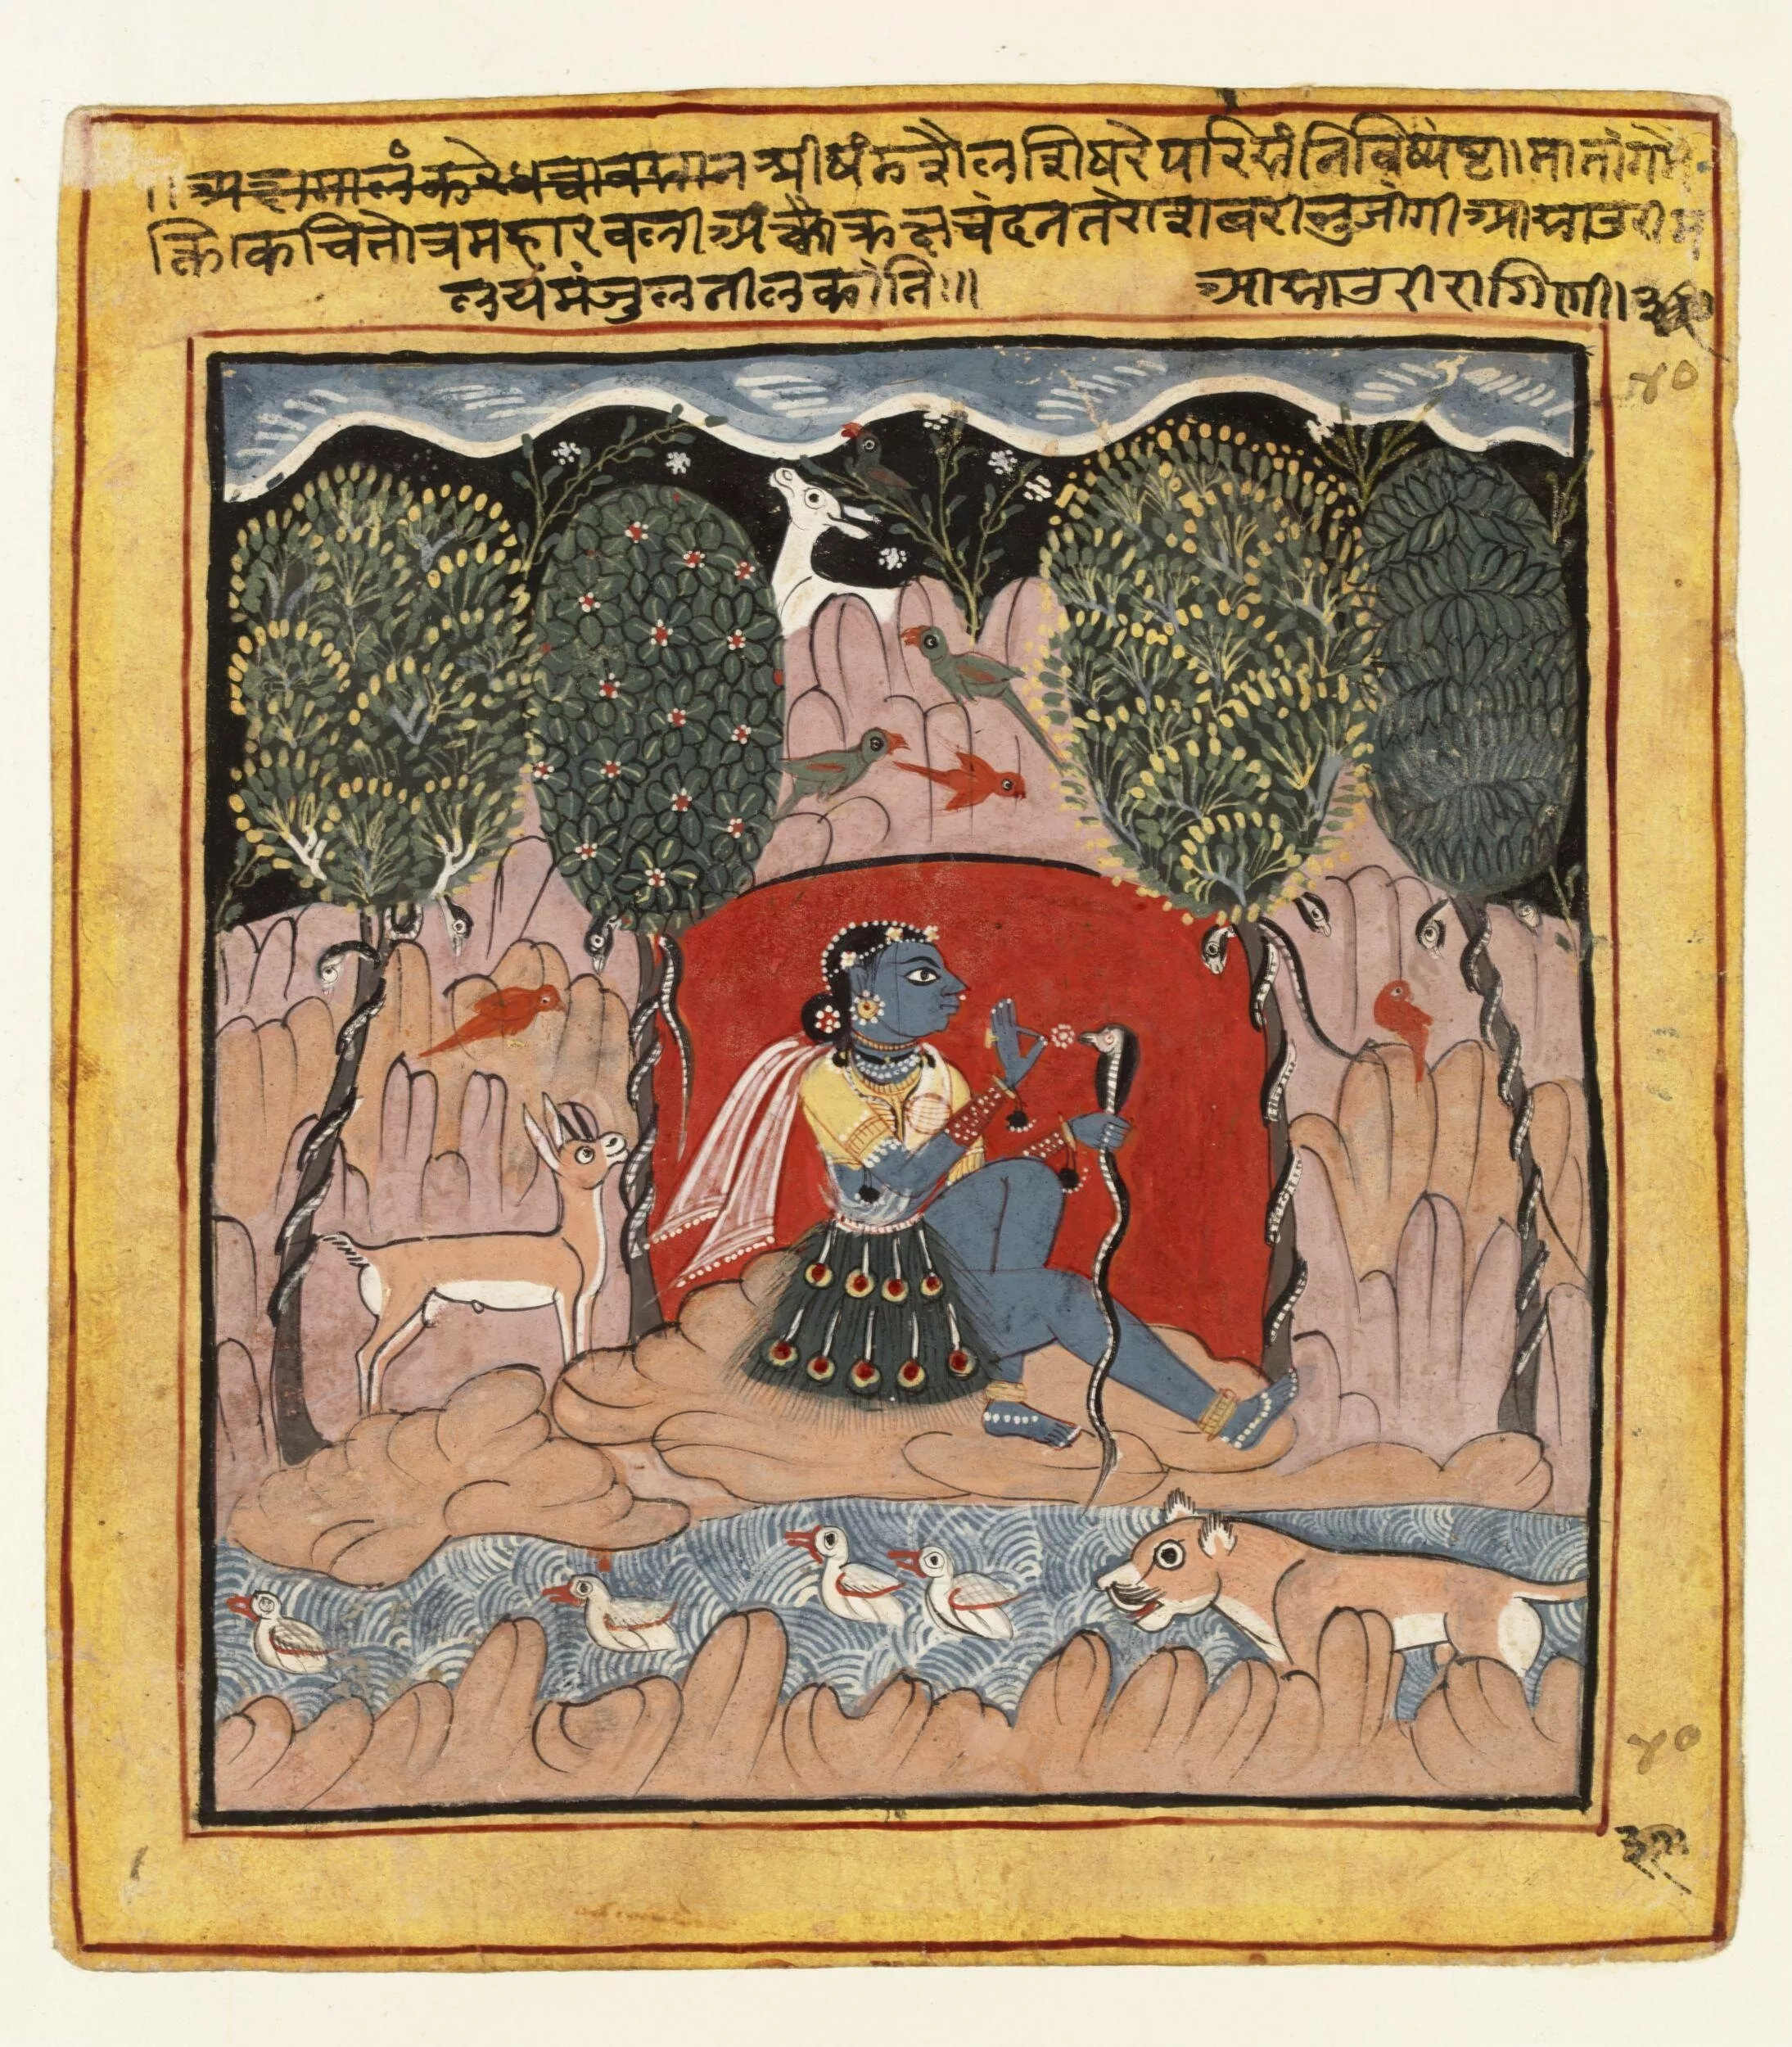 Asavari Ragini, Nisaruddin. A woman with blue skin holds a snake in her hand.